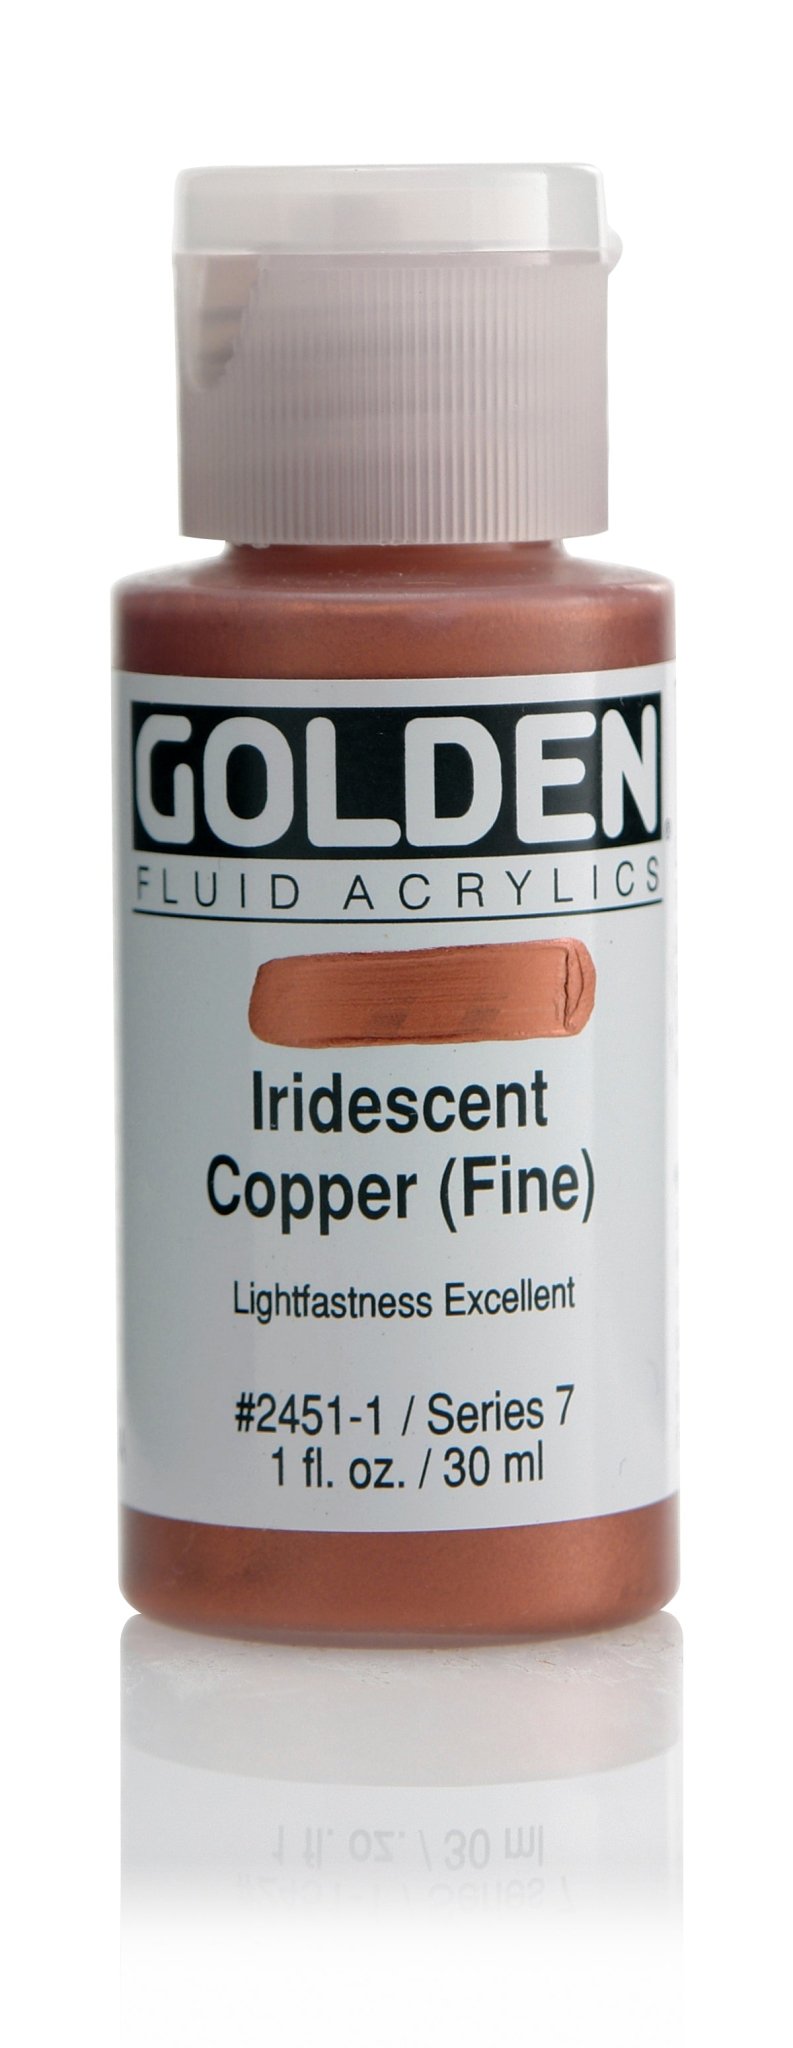 Golden Fluid Acrylics - Iridescent Copper (Fine) - 30ml - Create A Little Magic (Pty) Ltd